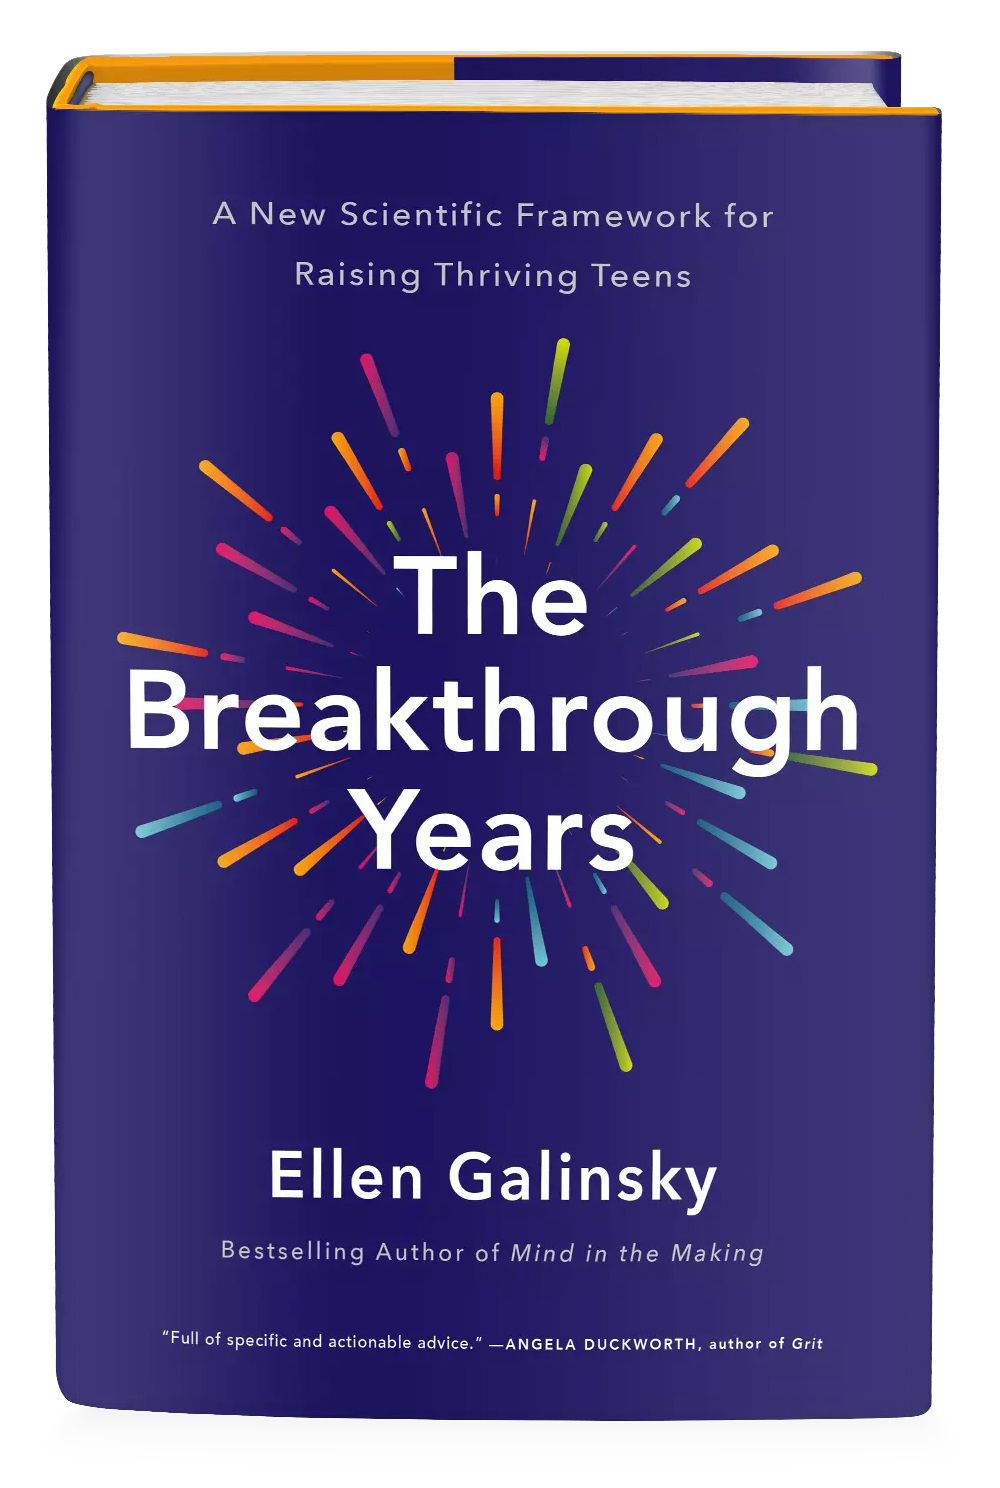 The Breakthrough Years, by Ellen Galinsky